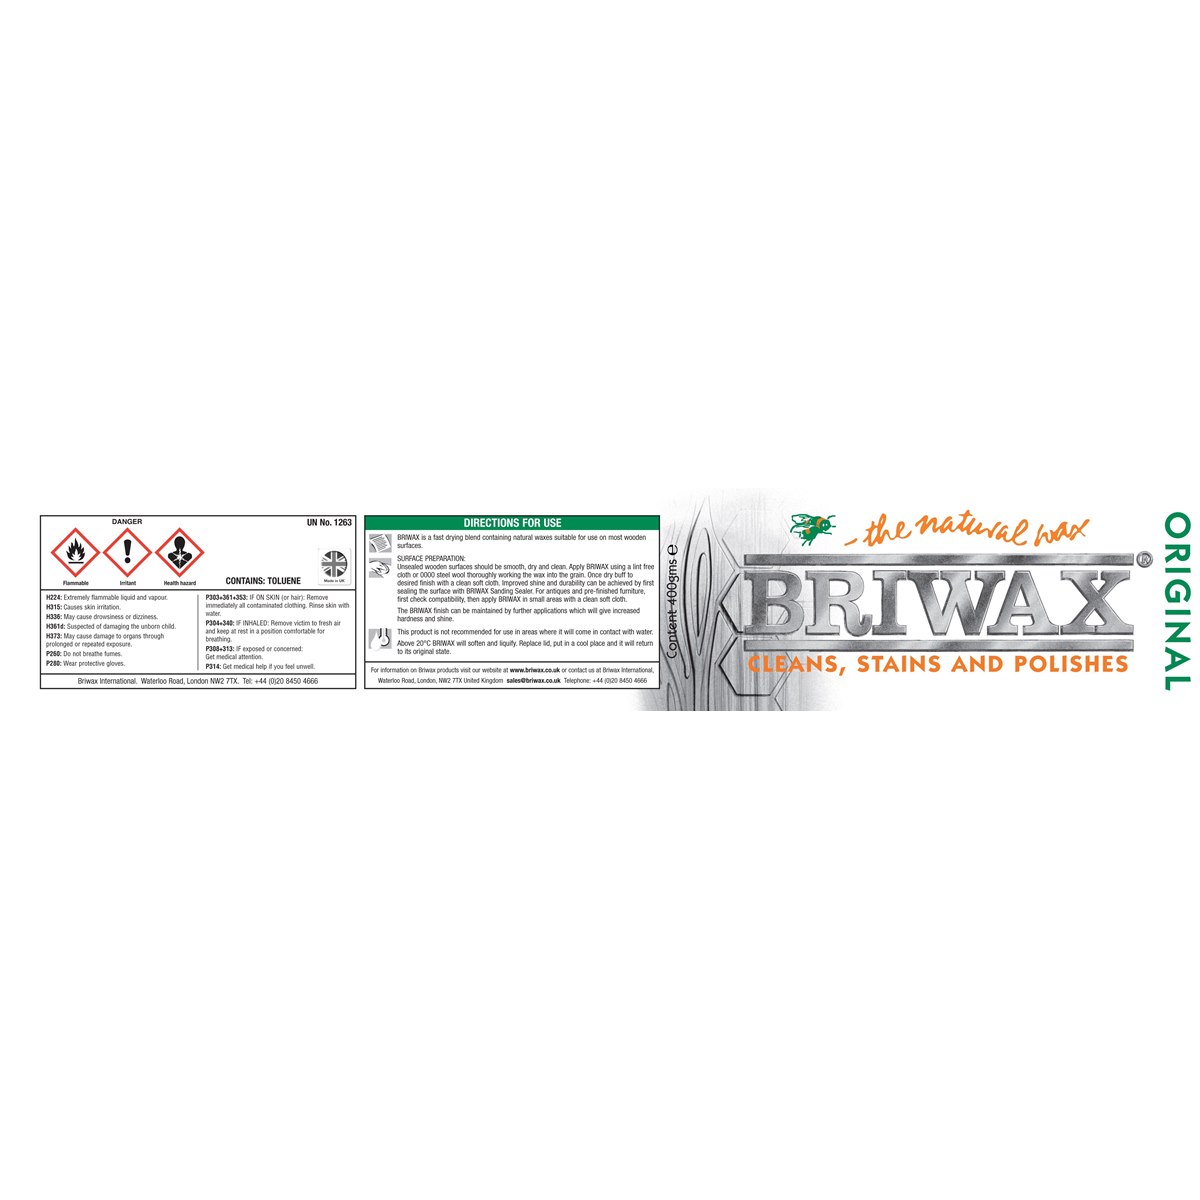 How to apply Briwax Original Furniture Wax